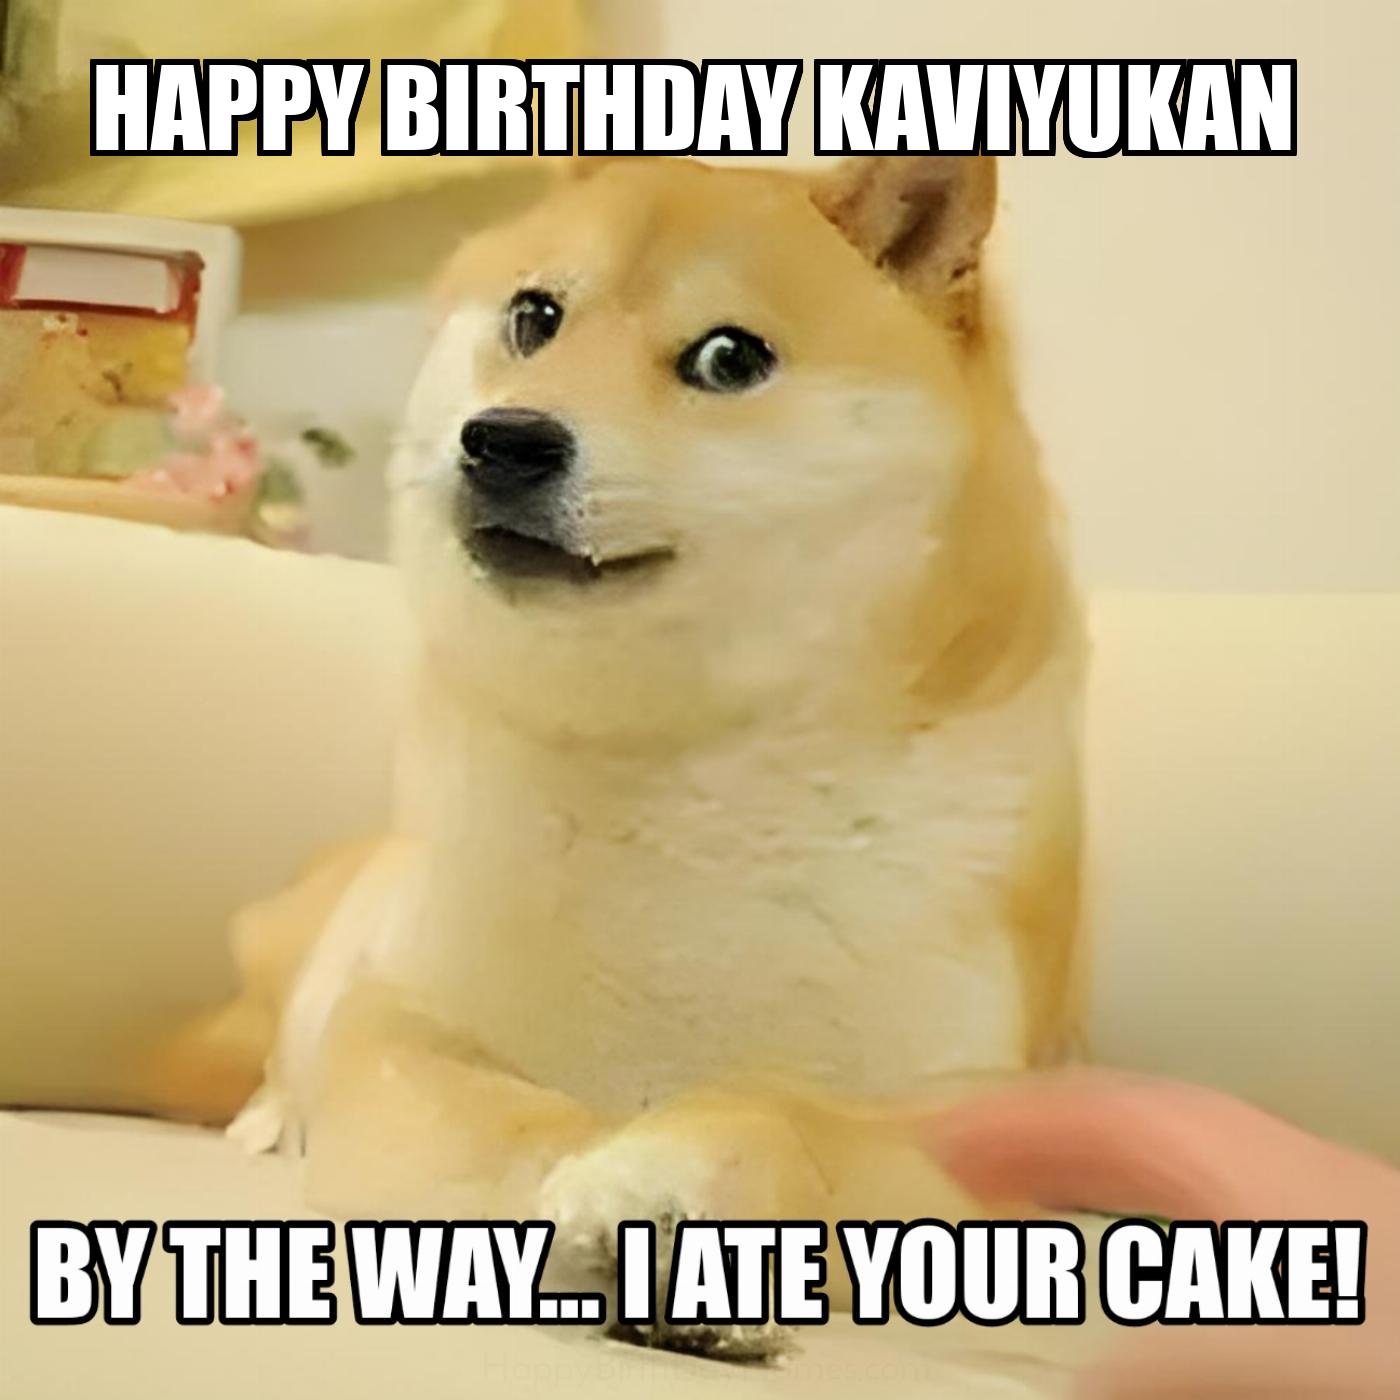 Happy Birthday Kaviyukan BTW I Ate Your Cake Meme